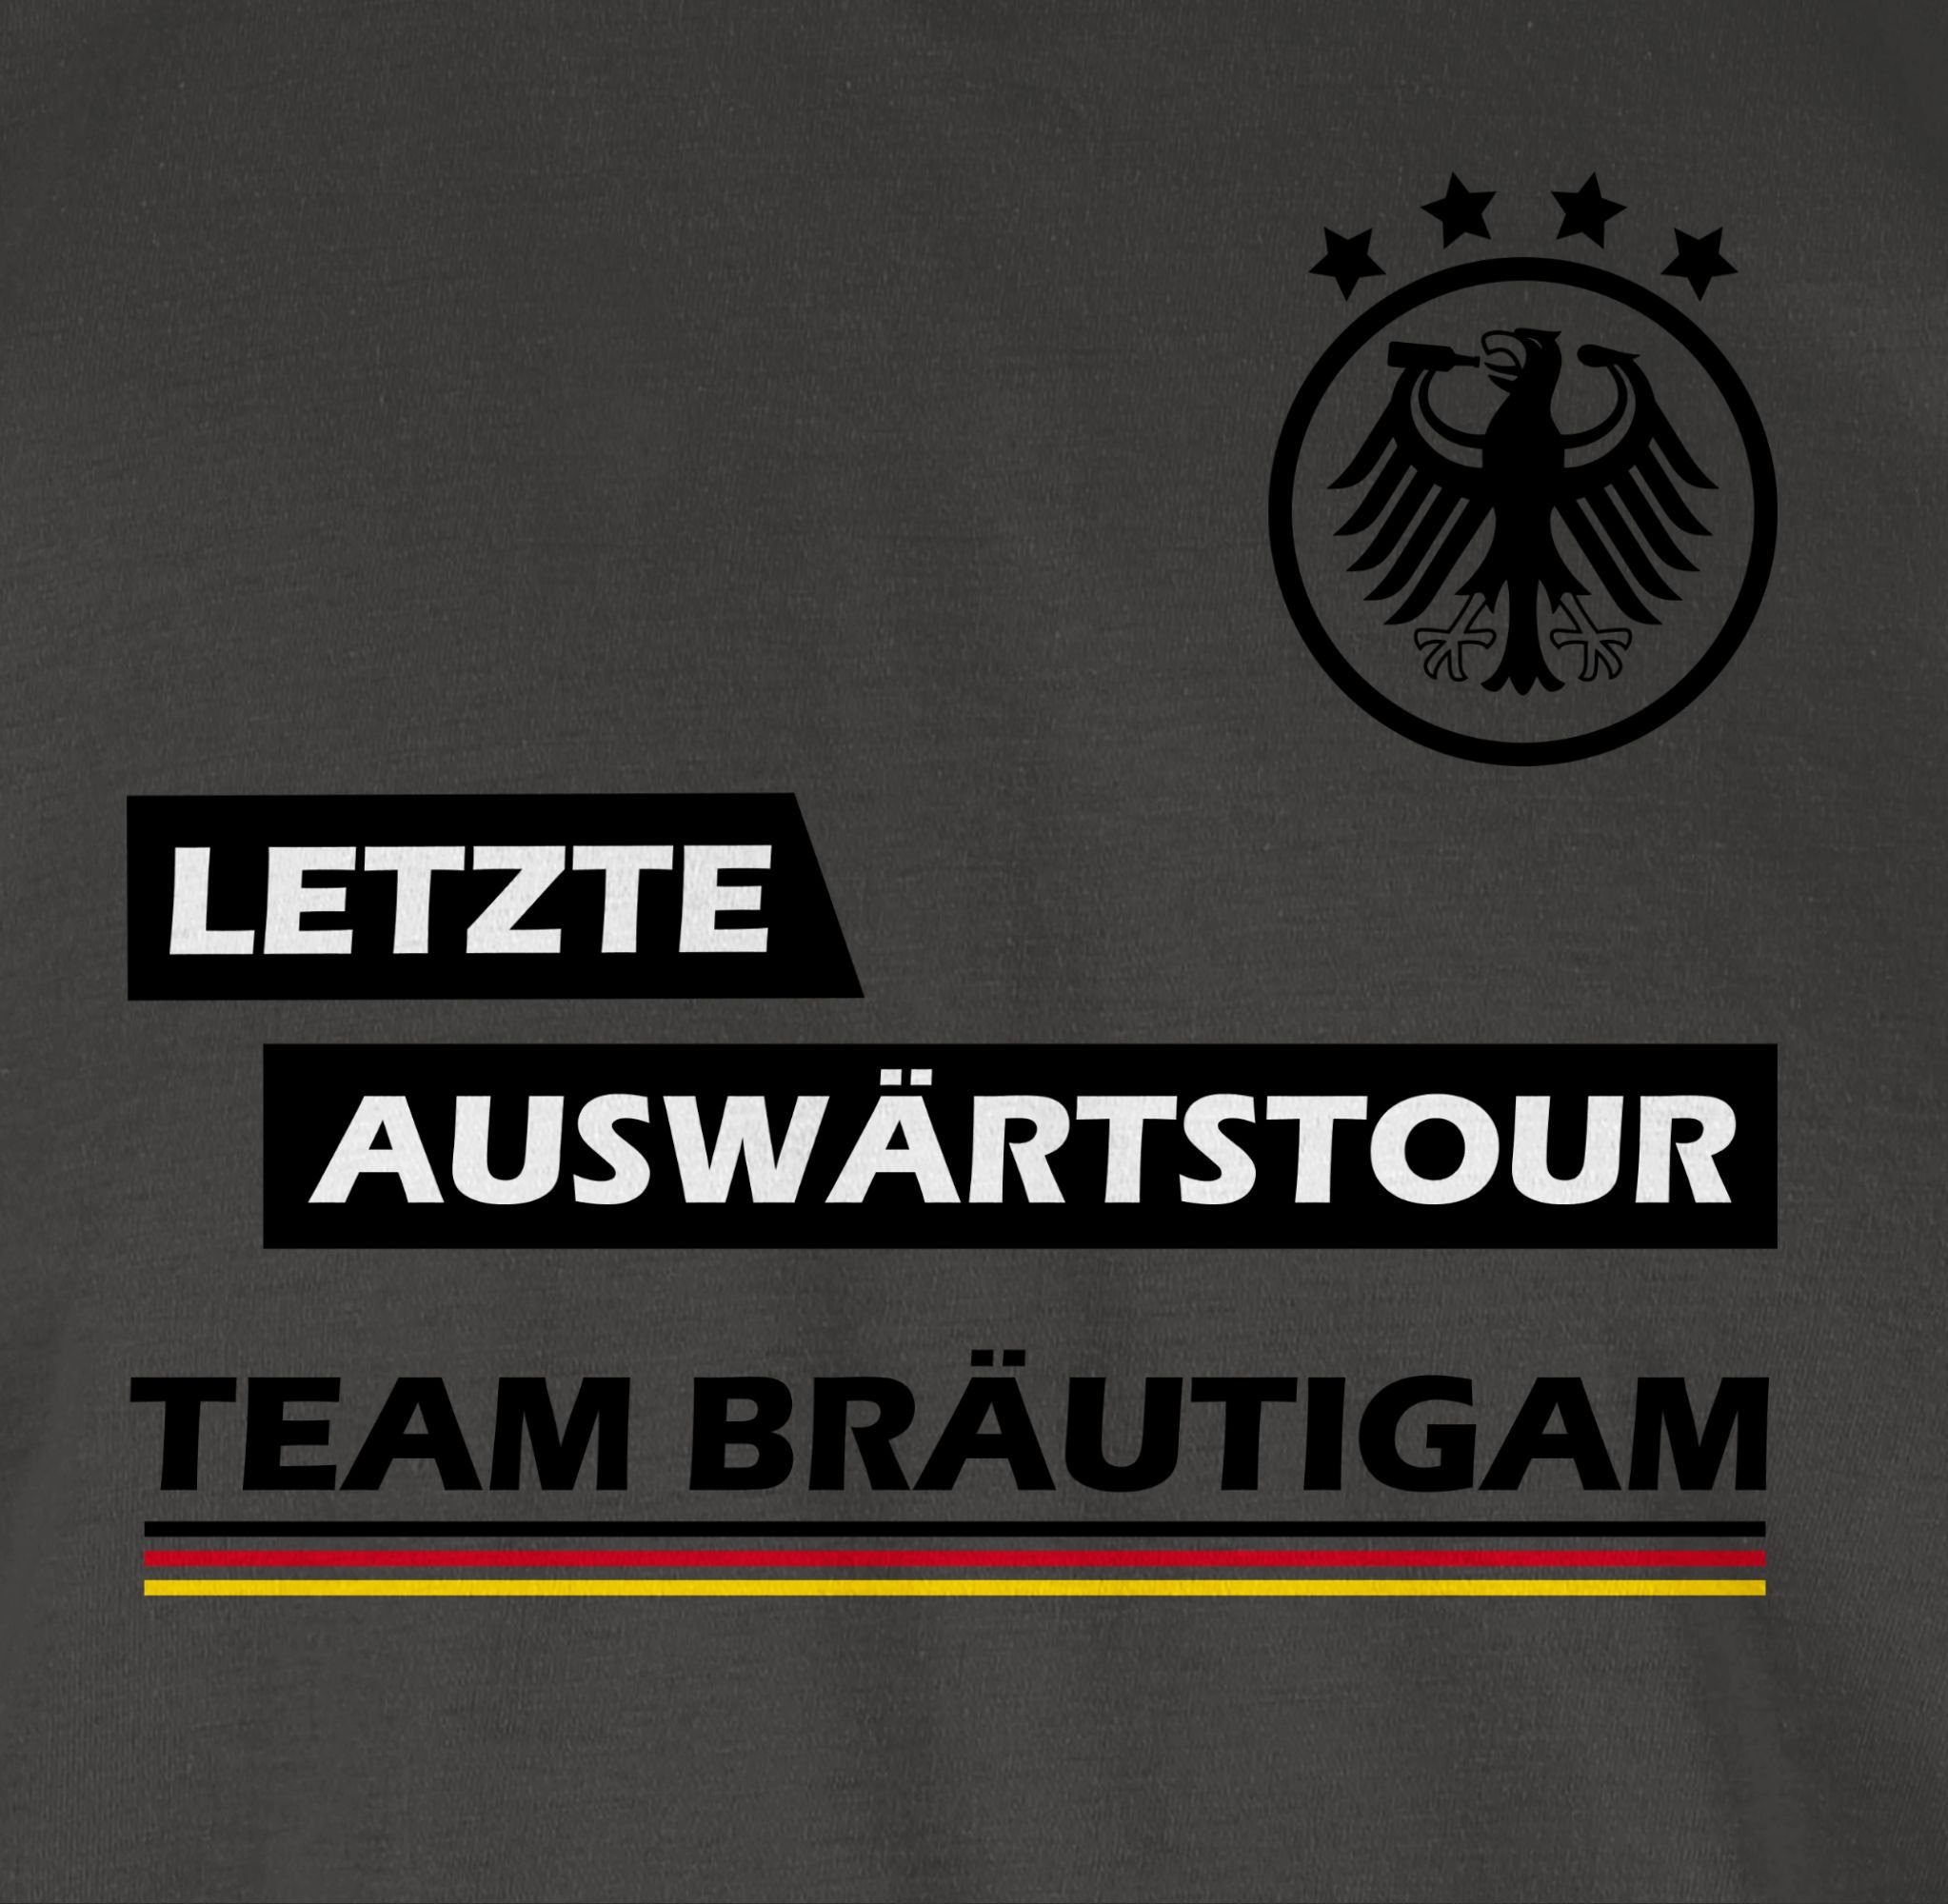 Dunkelgrau T-Shirt Letzte Shirtracer Männer 2 JGA Team Bräutigam Auswärtstour